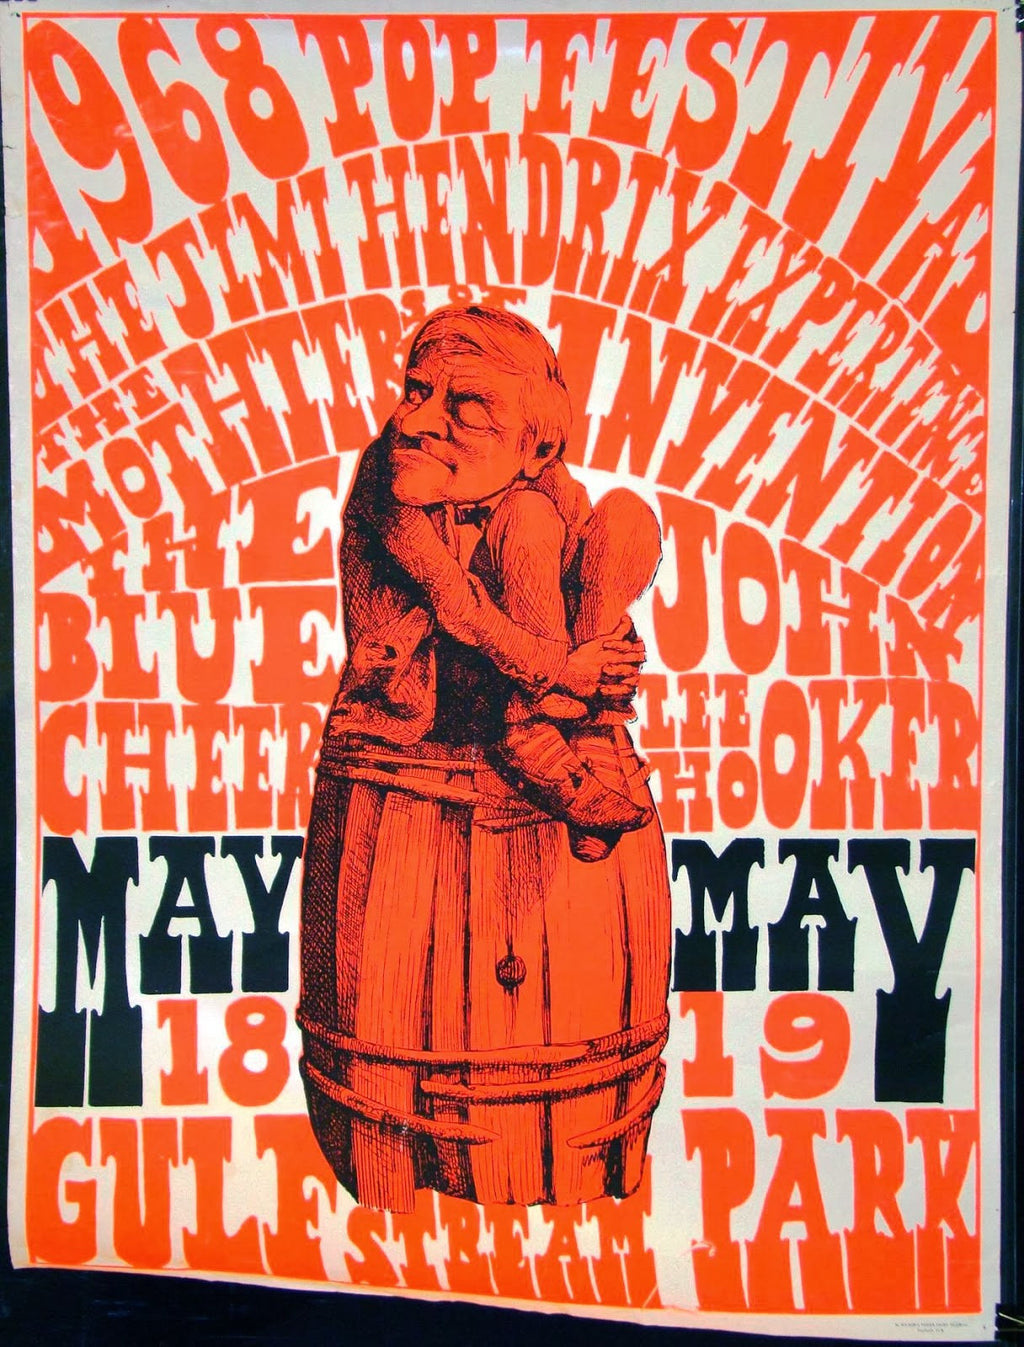 Vintage Music Art Poster - 1968 Pop Festival - Jimi Hendrix - 0575